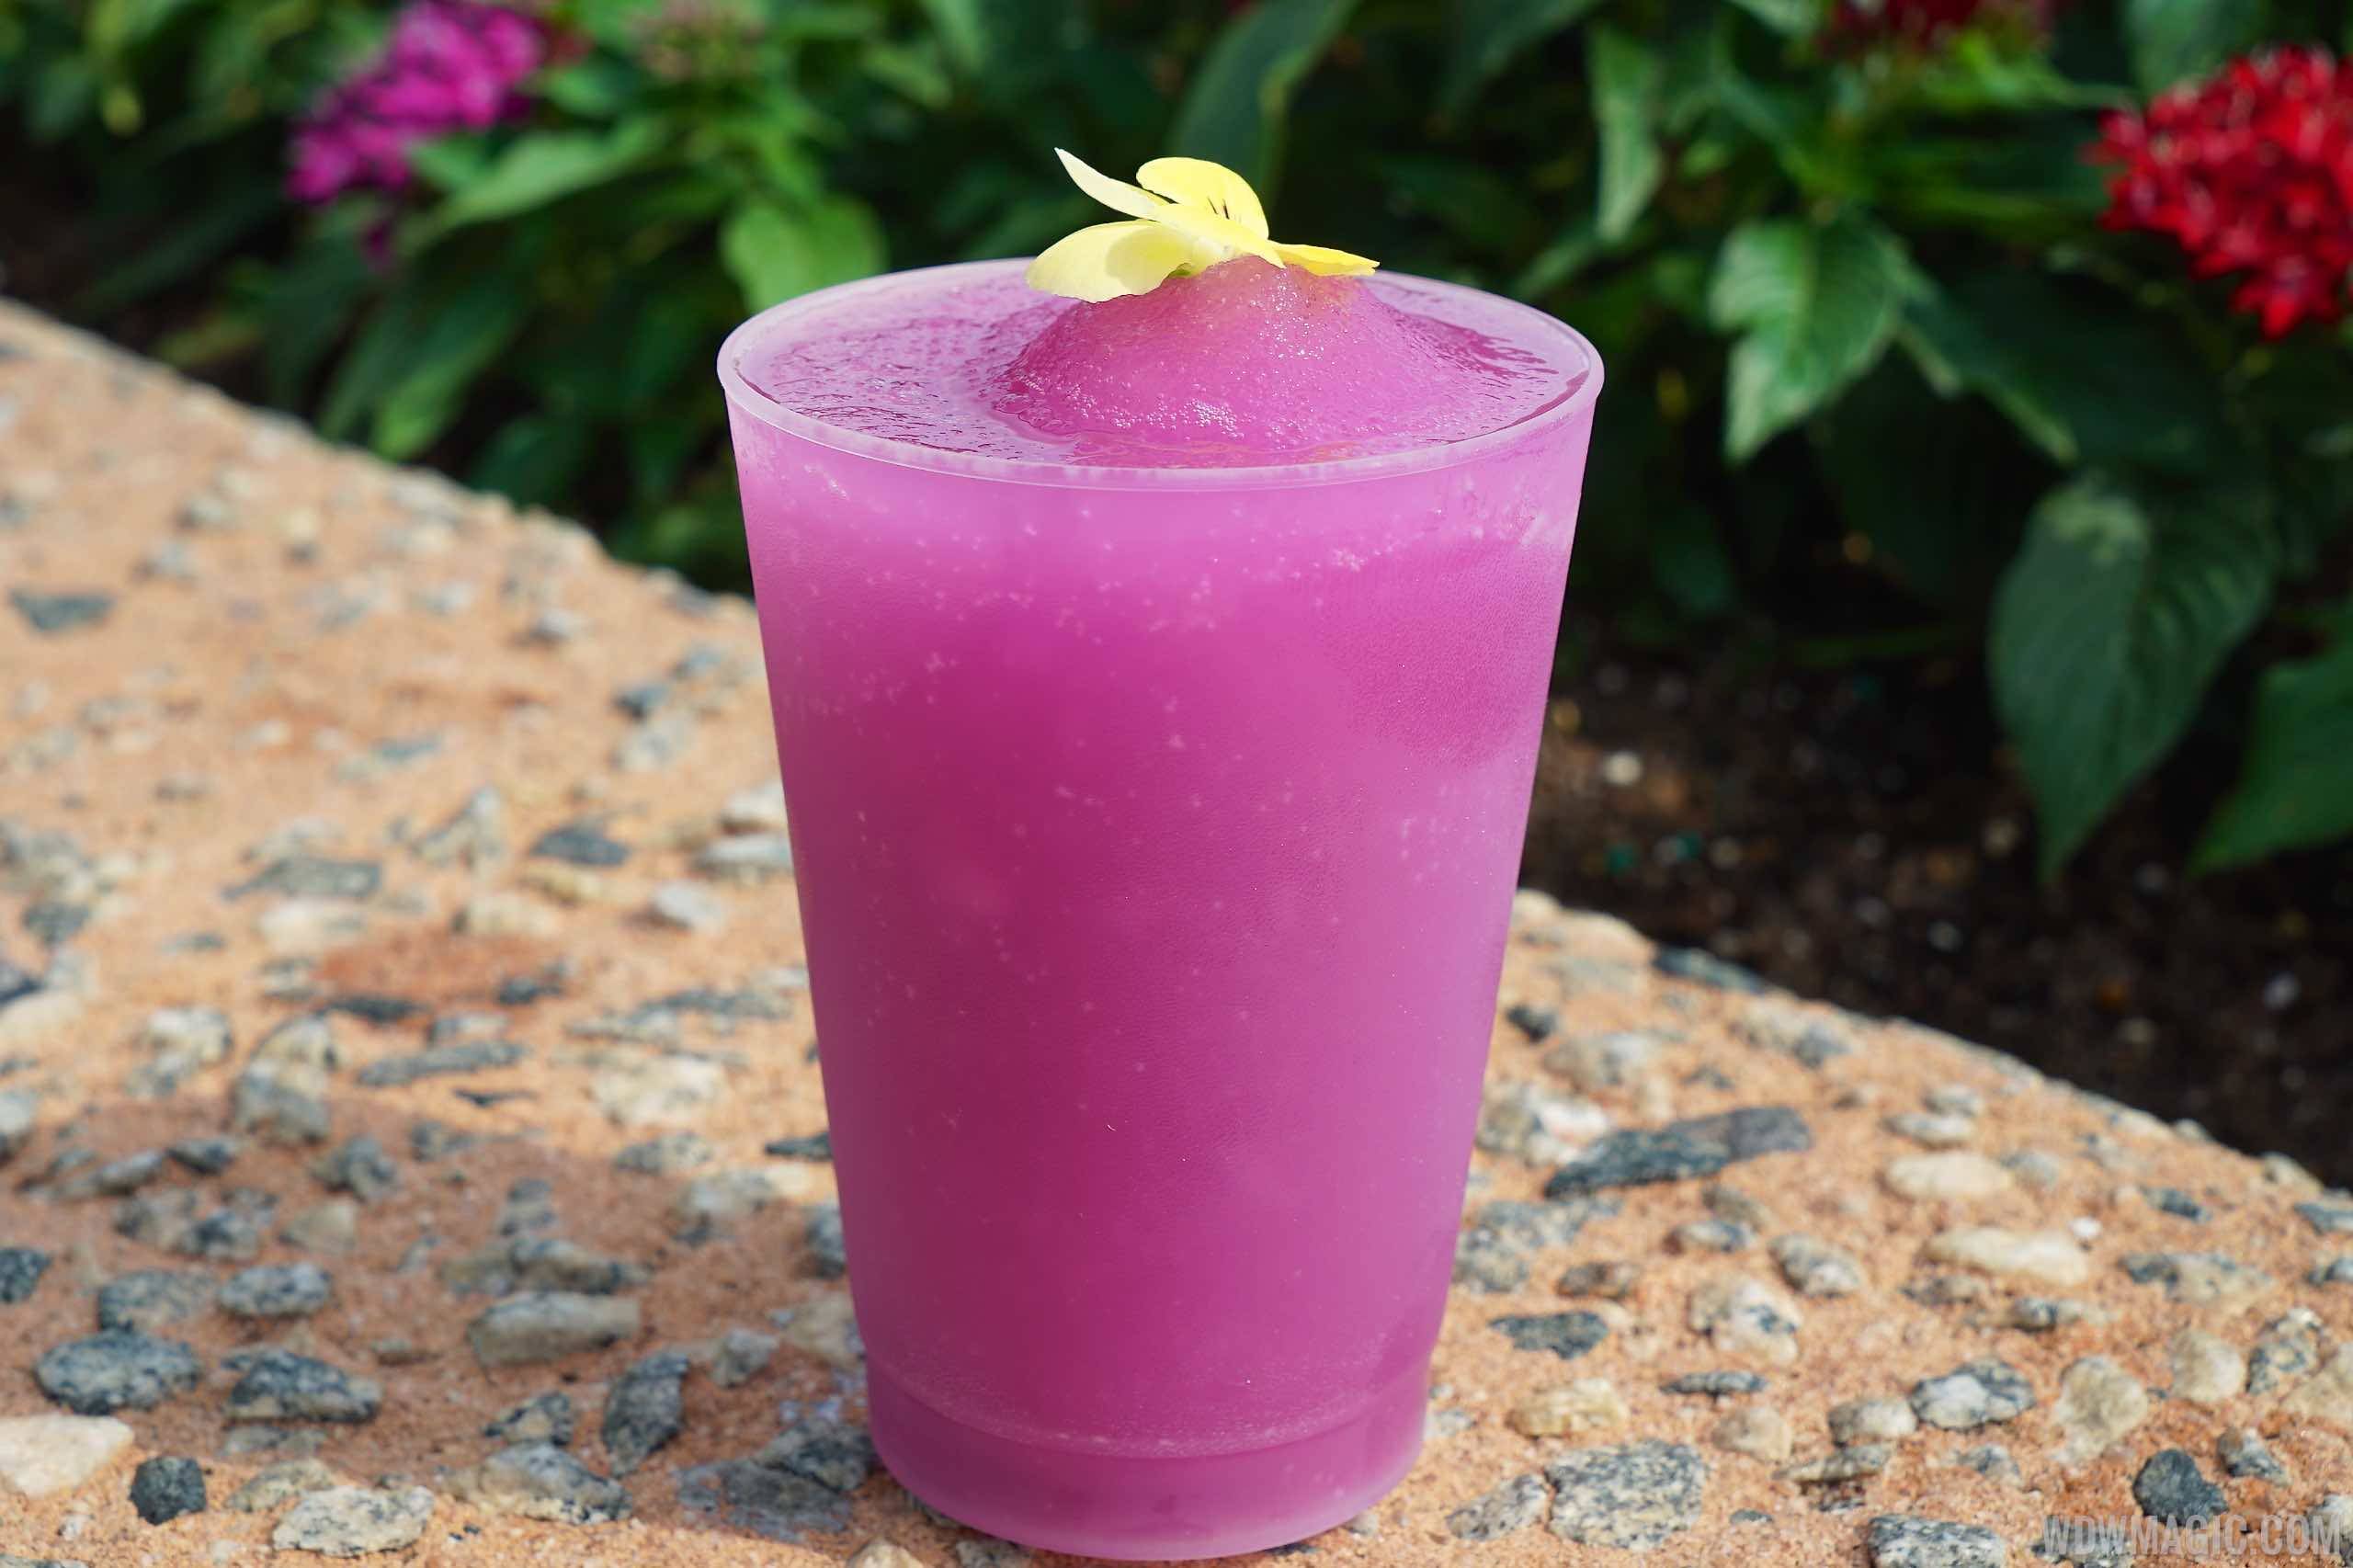 2015 Epcot Flower and Garden Festival Outdoor Kitchen - Pineapple Promenade - Frozen Desert Violet Lemonade $3